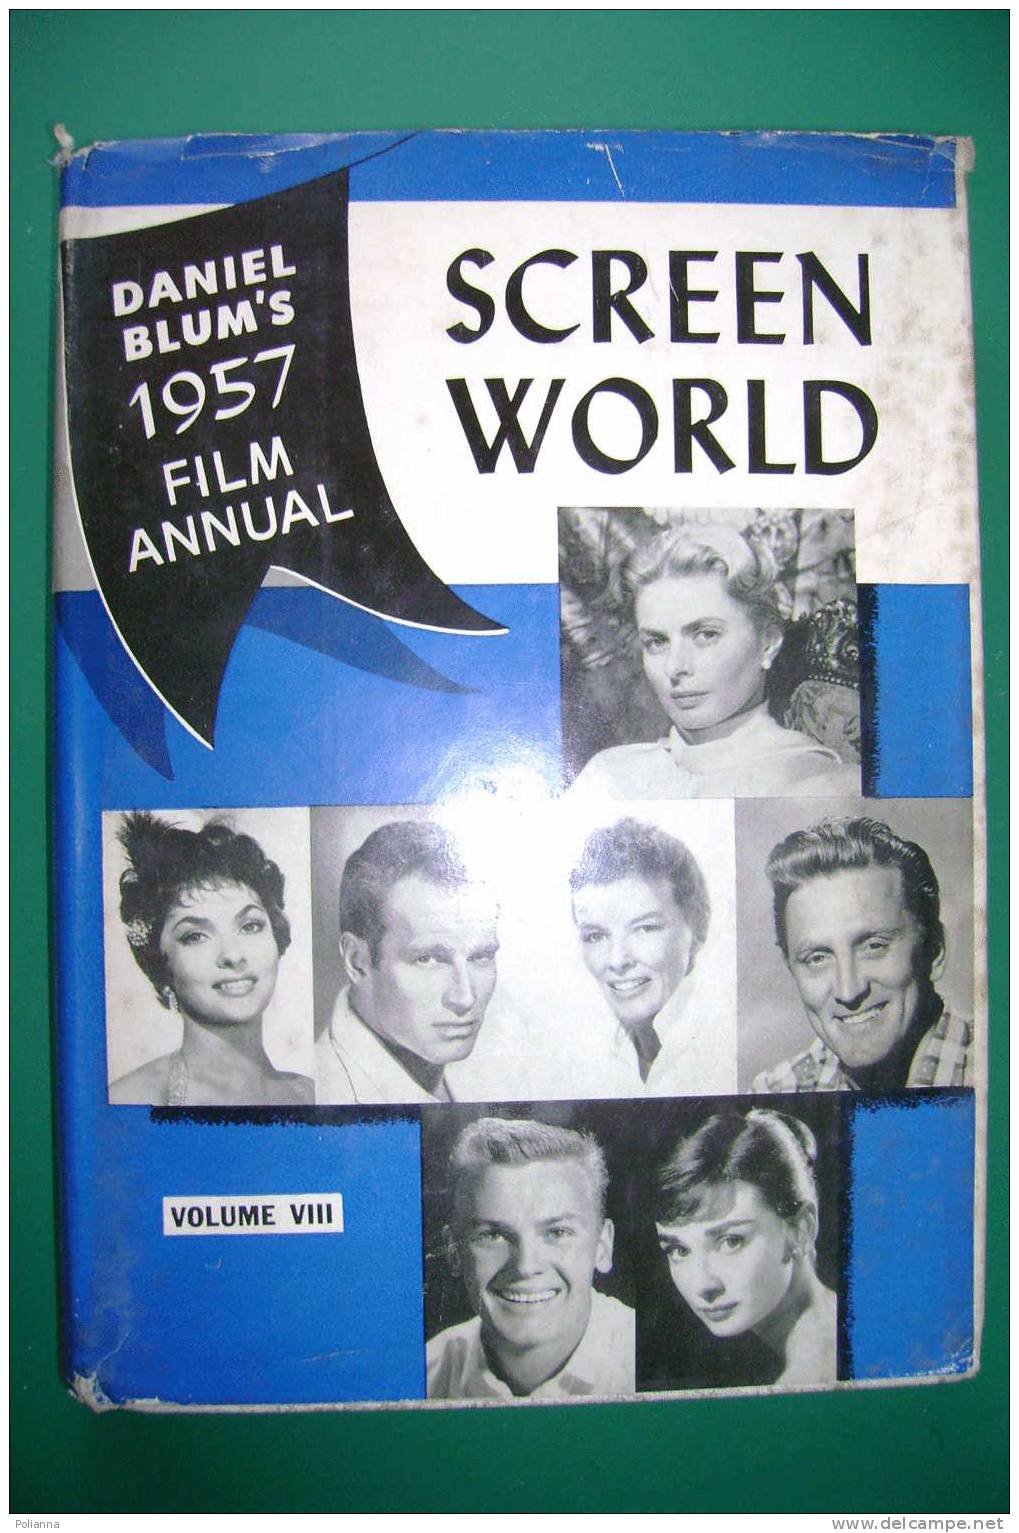 PDI/7 Daniel Blum's 1957 FILM ANNUAL SCREEN WORLD V.VIII/Ingrid Bergman/Humphrey Bogart/Marylin Monroe/Elvis Presley - Film